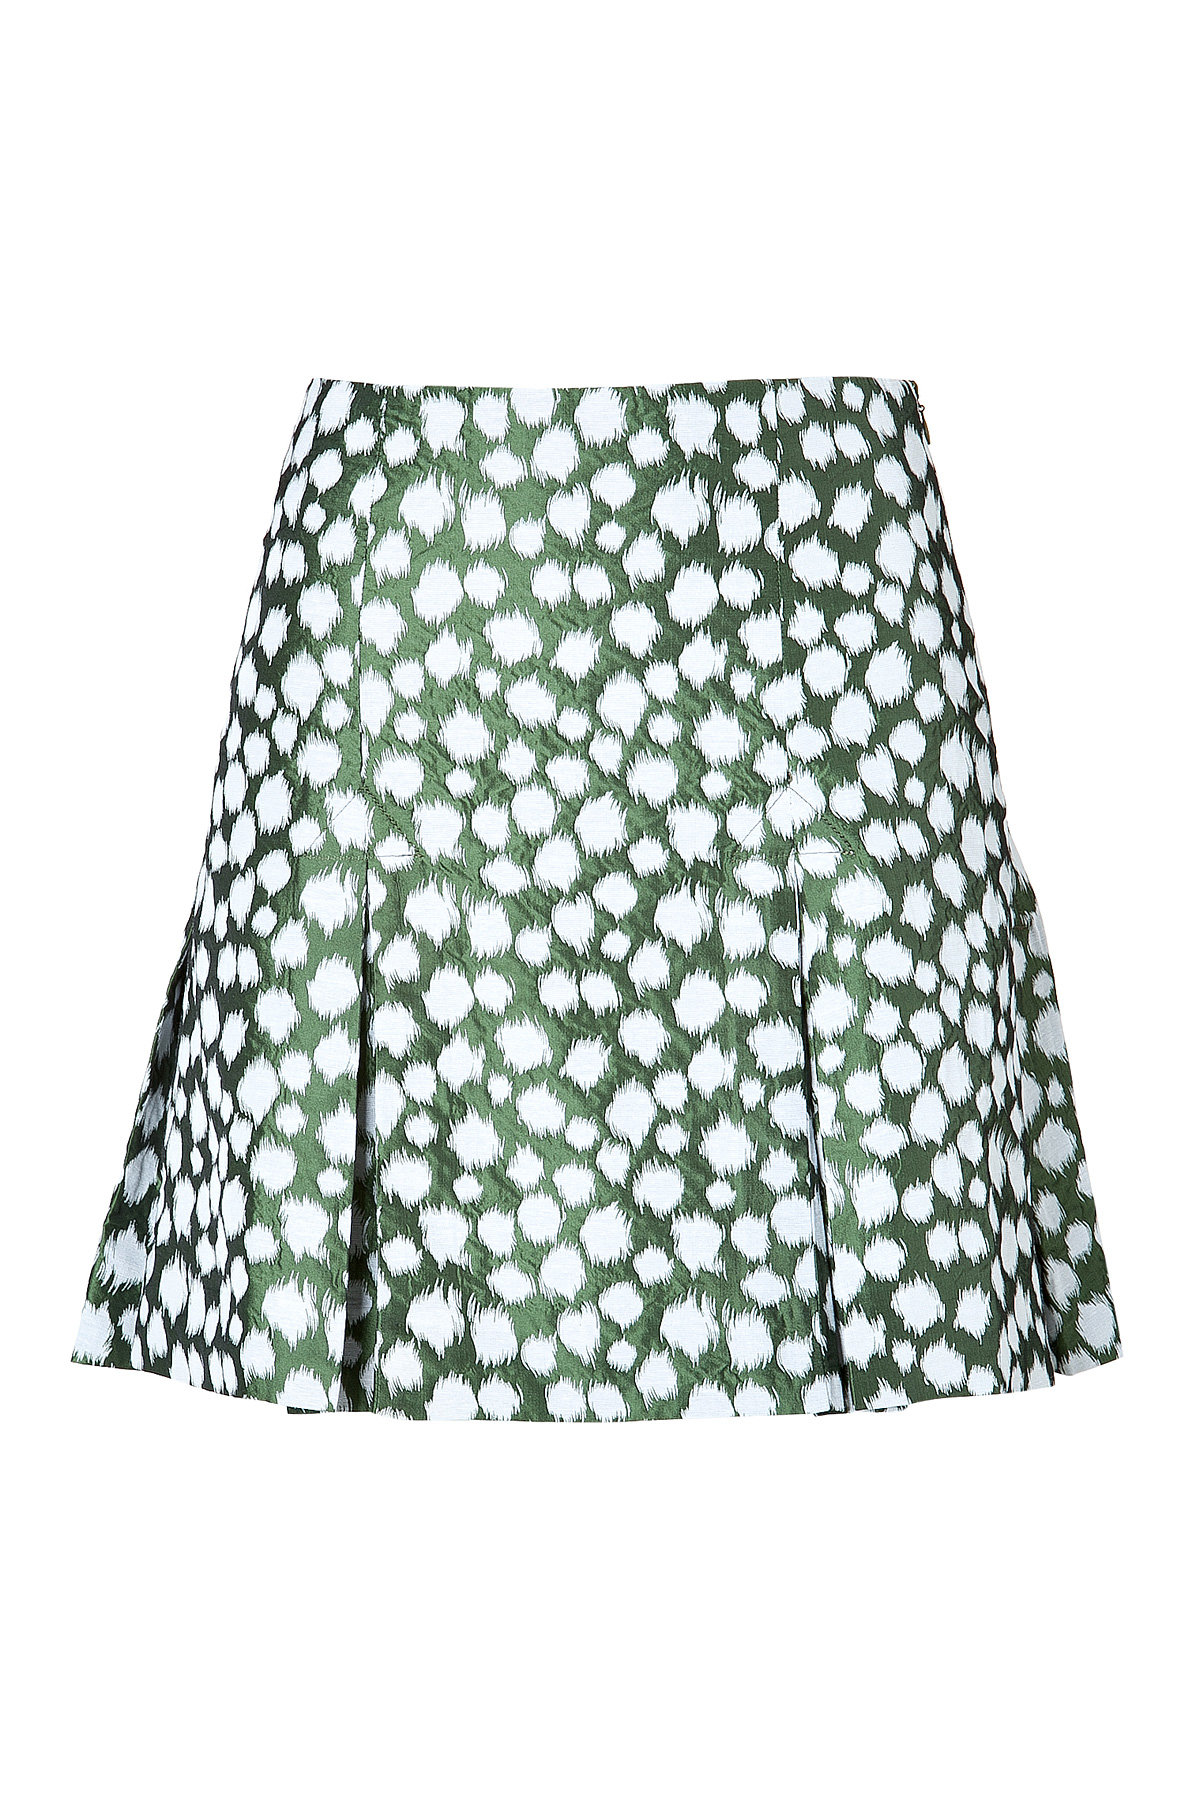 Ostwald Helgason - Skirt in Green Deer